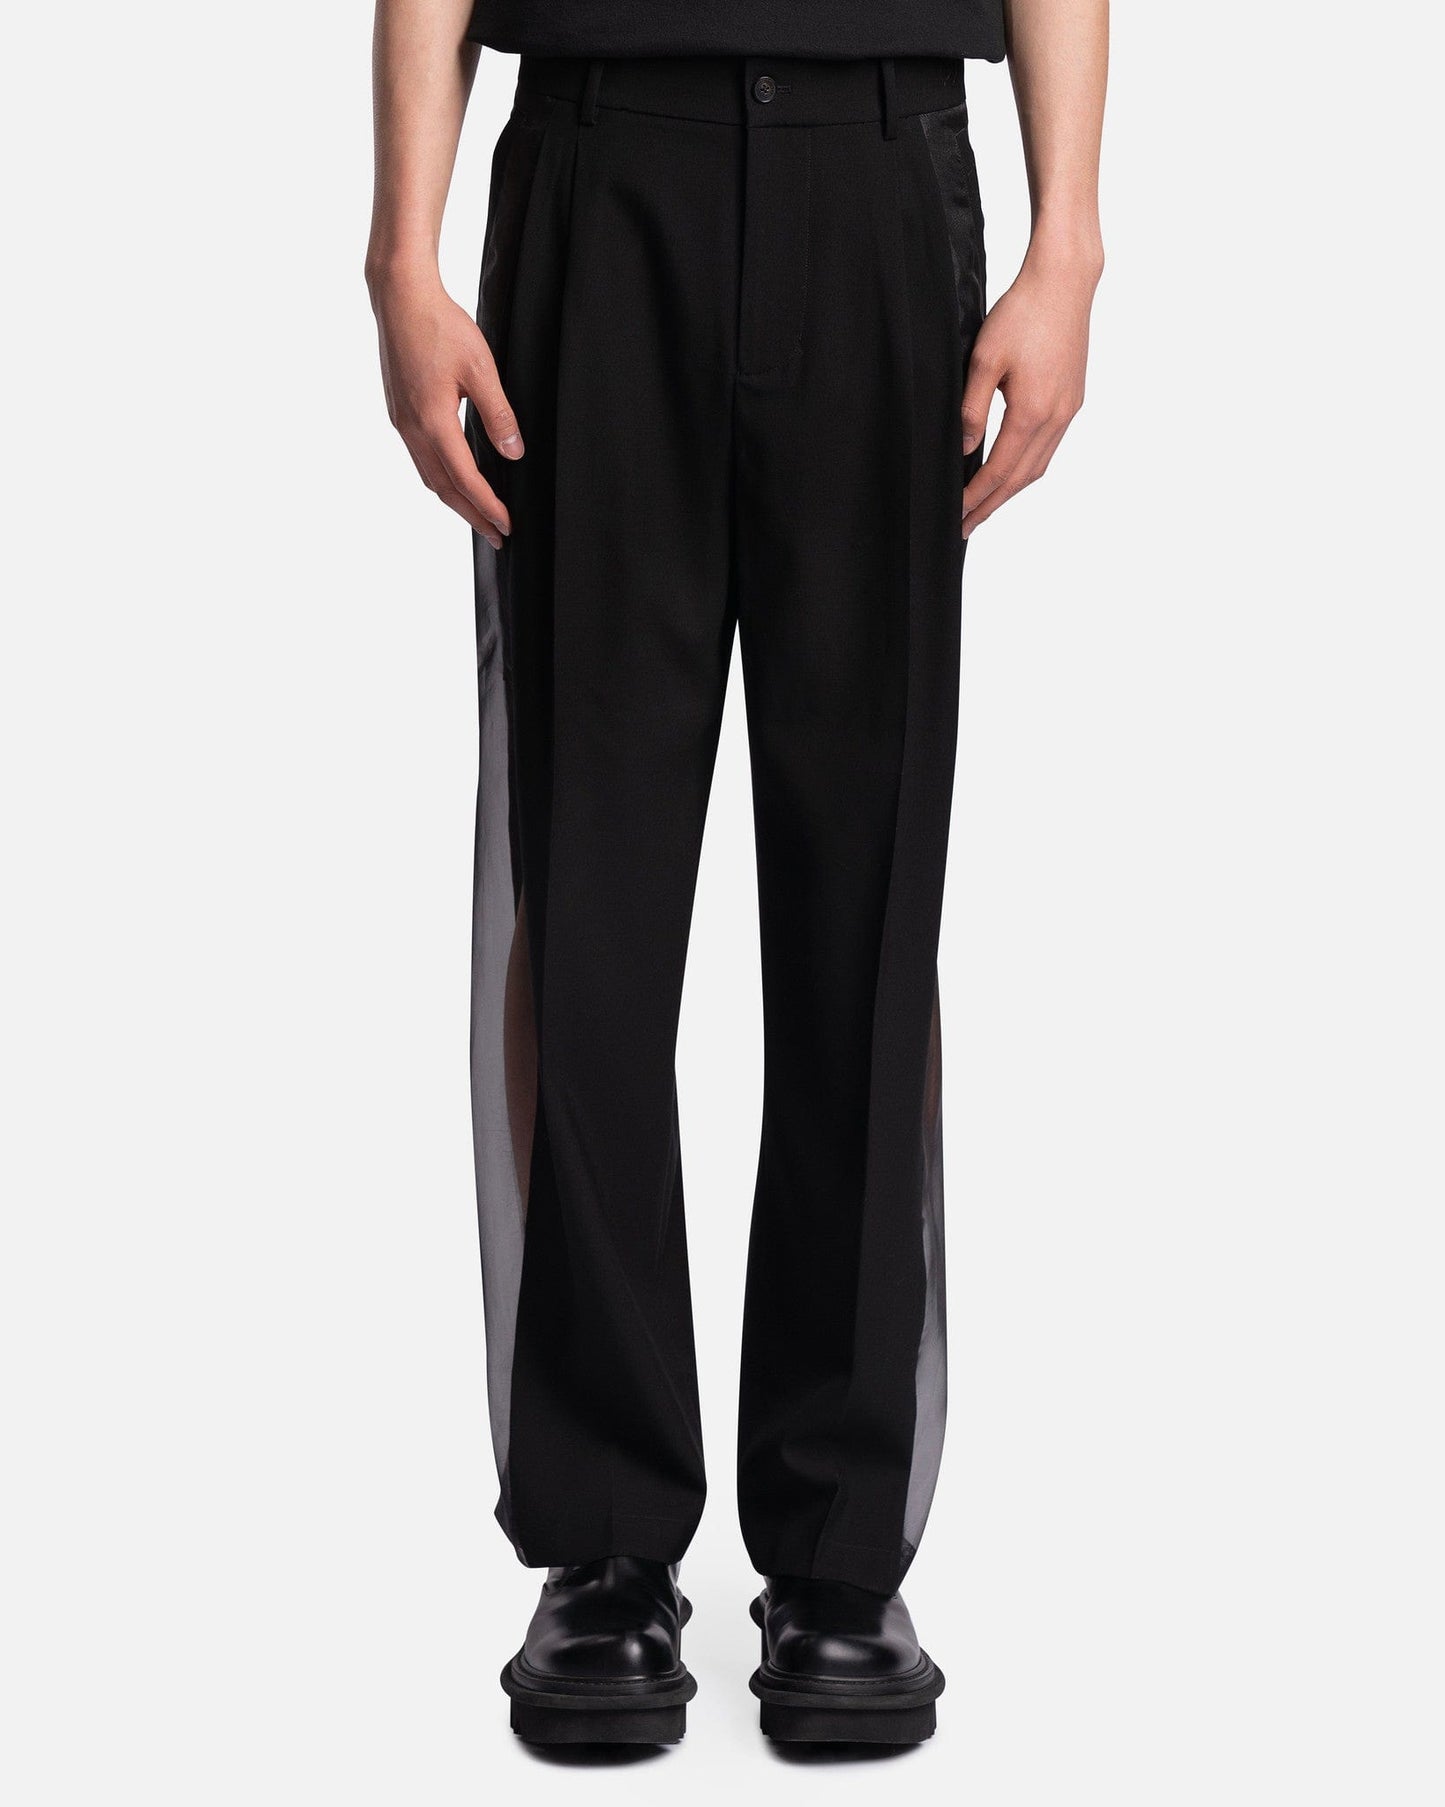 Feng Chen Wang Men's Pants Sheer Panel Trousers in Black